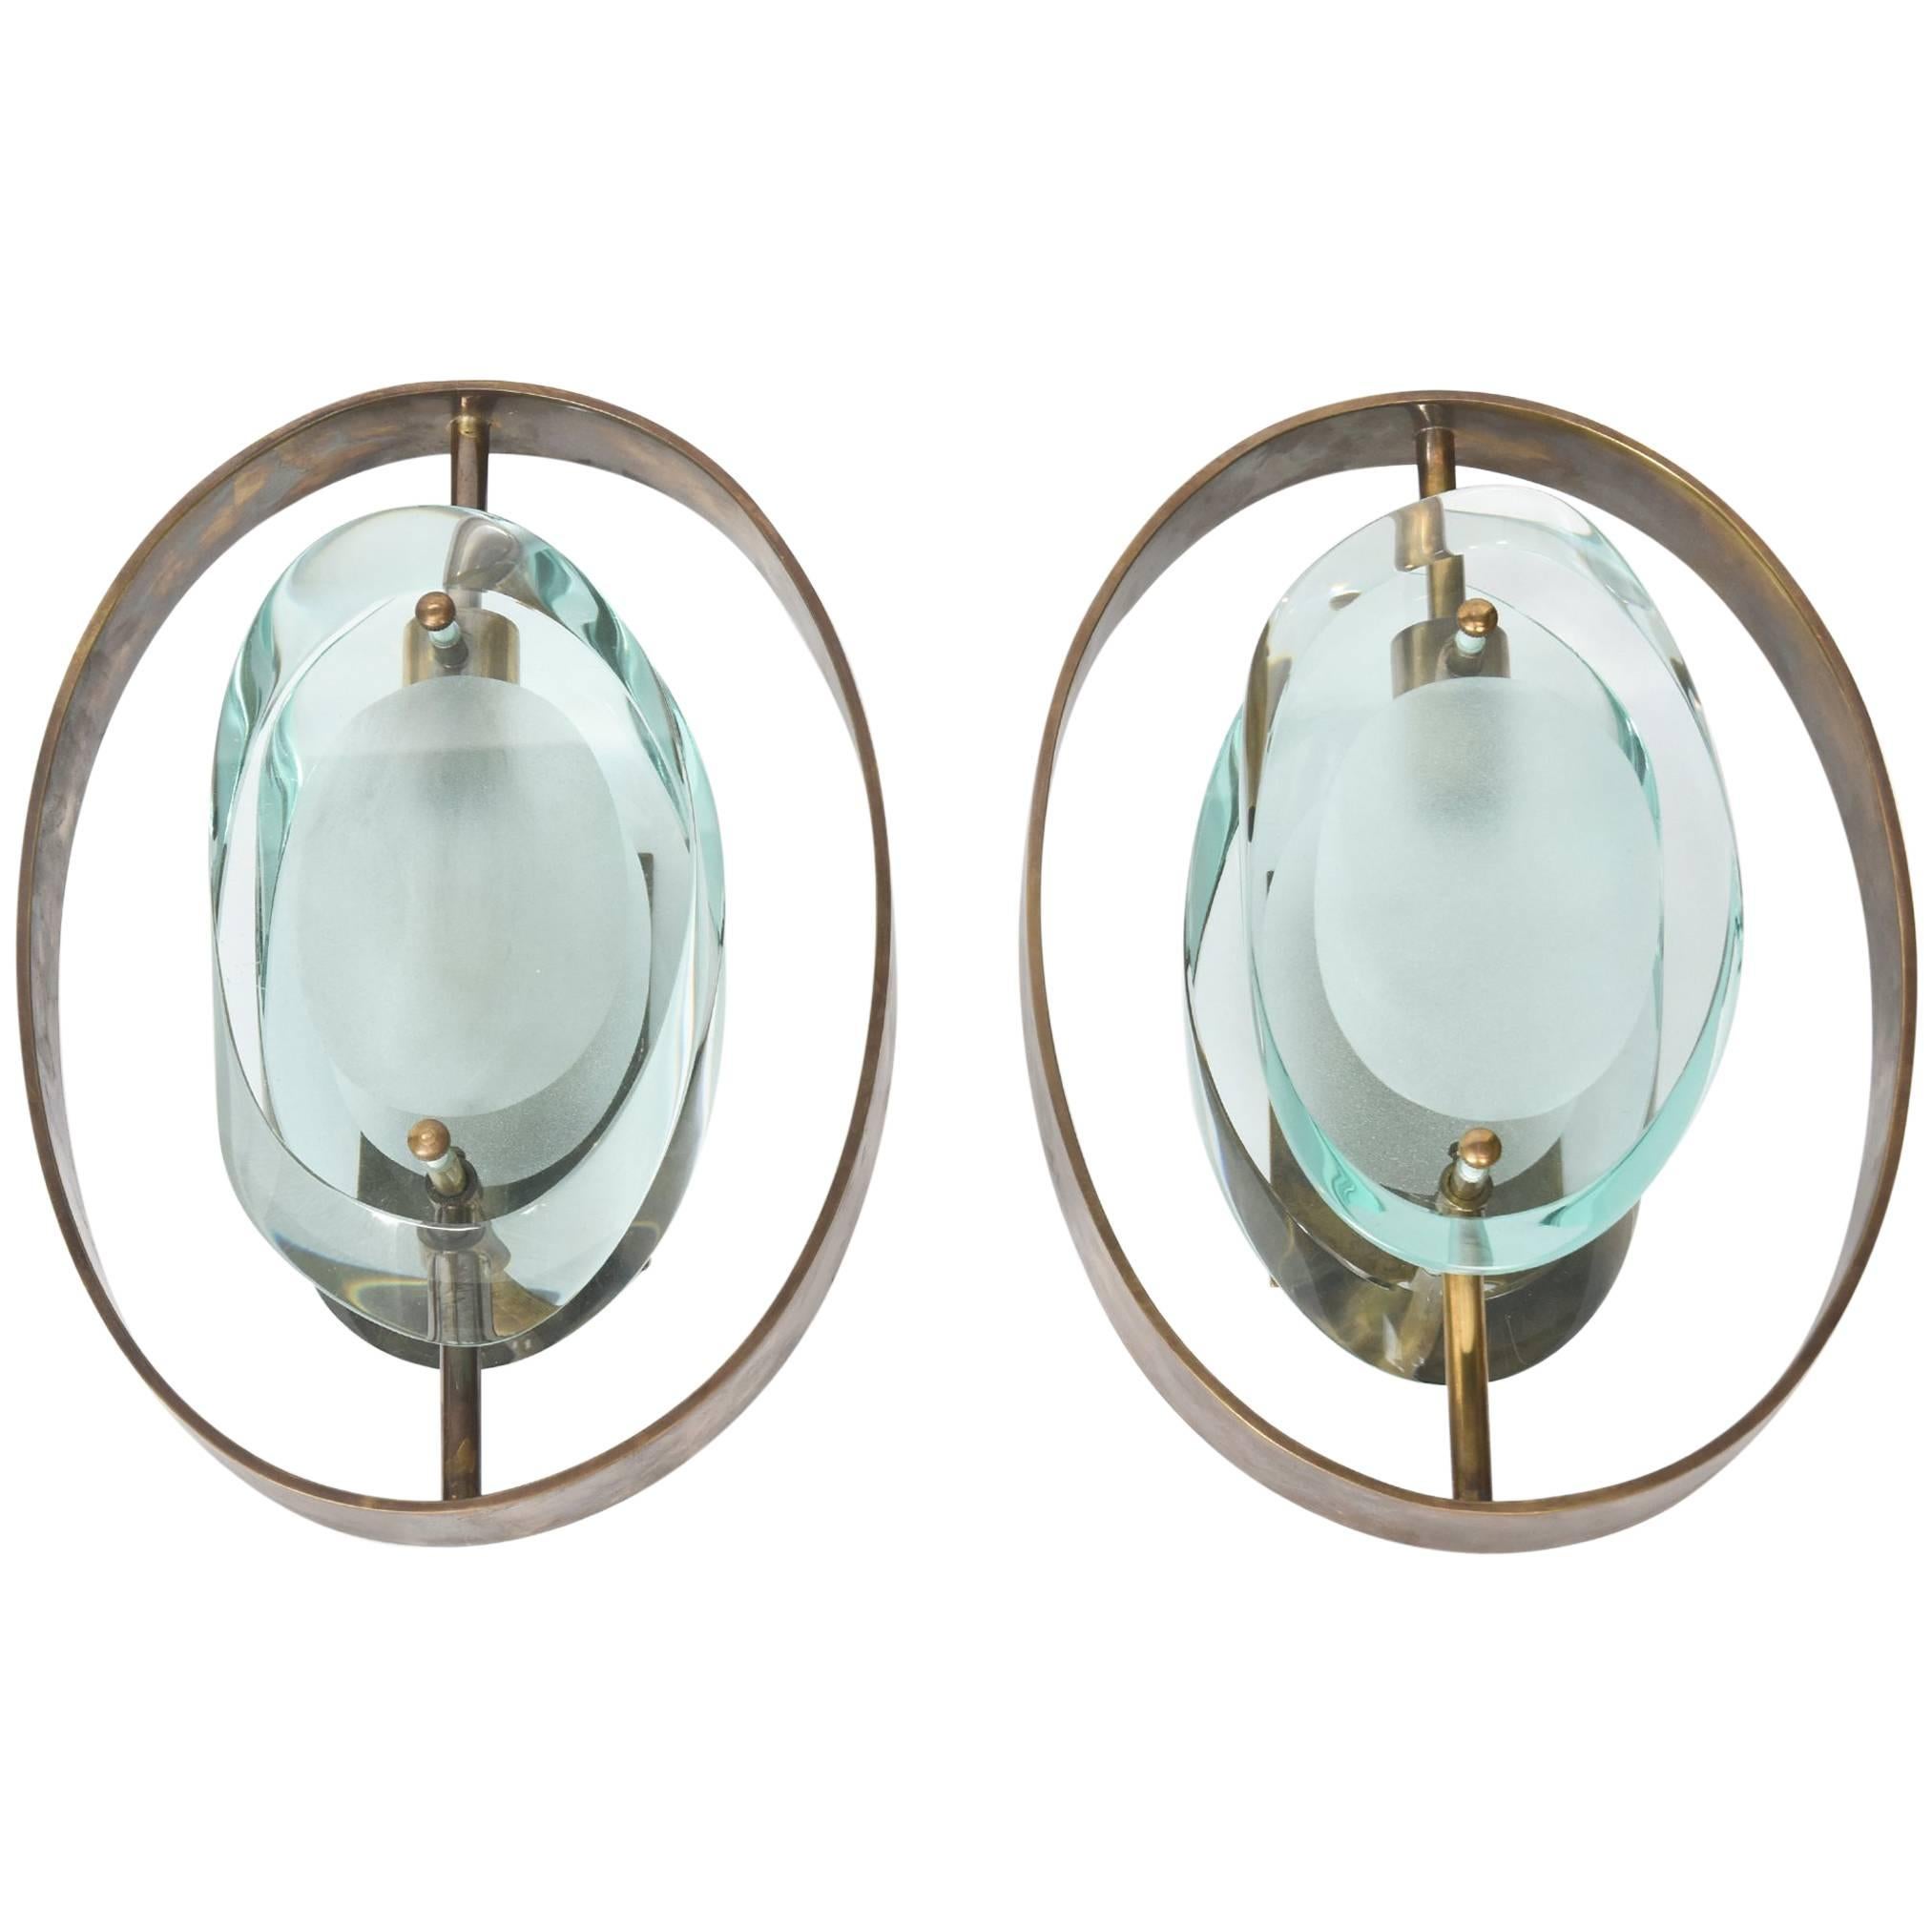 Pair of Italian Modern Brass and Glass Wall Lights, Model 2240